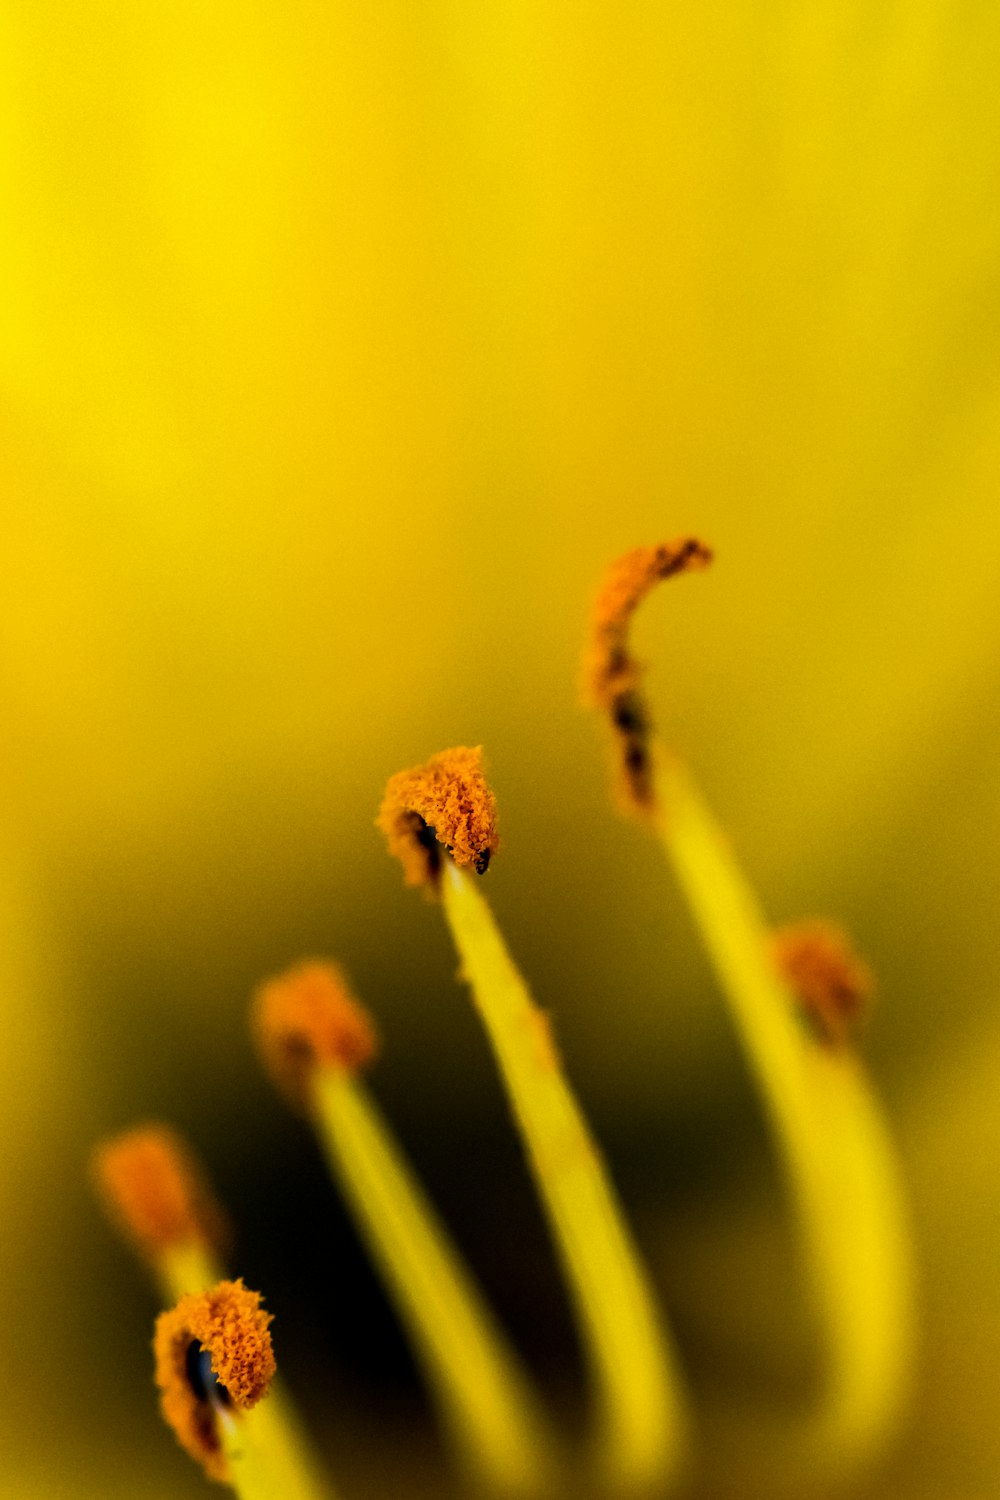 macrophotographie de pollen de fleurs